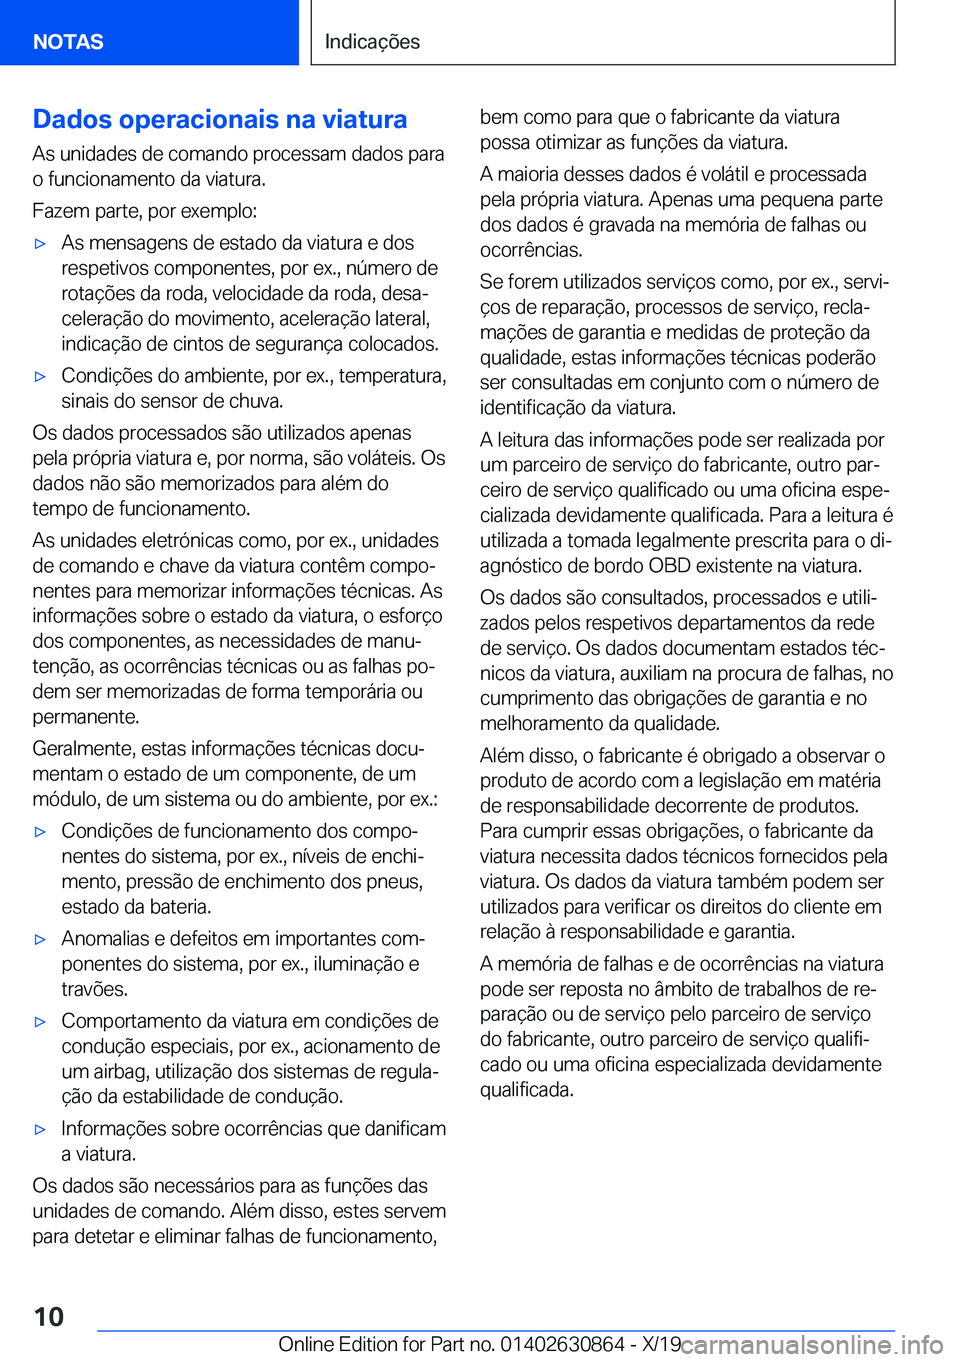 BMW 4 SERIES GRAN COUPE 2020  Manual do condutor (in Portuguese) �D�a�d�o�s��o�p�e�r�a�c�i�o�n�a�i�s��n�a��v�i�a�t�u�r�a
�A�s��u�n�i�d�a�d�e�s��d�e��c�o�m�a�n�d�o��p�r�o�c�e�s�s�a�m��d�a�d�o�s��p�a�r�a
�o��f�u�n�c�i�o�n�a�m�e�n�t�o��d�a��v�i�a�t�u�r�a�.